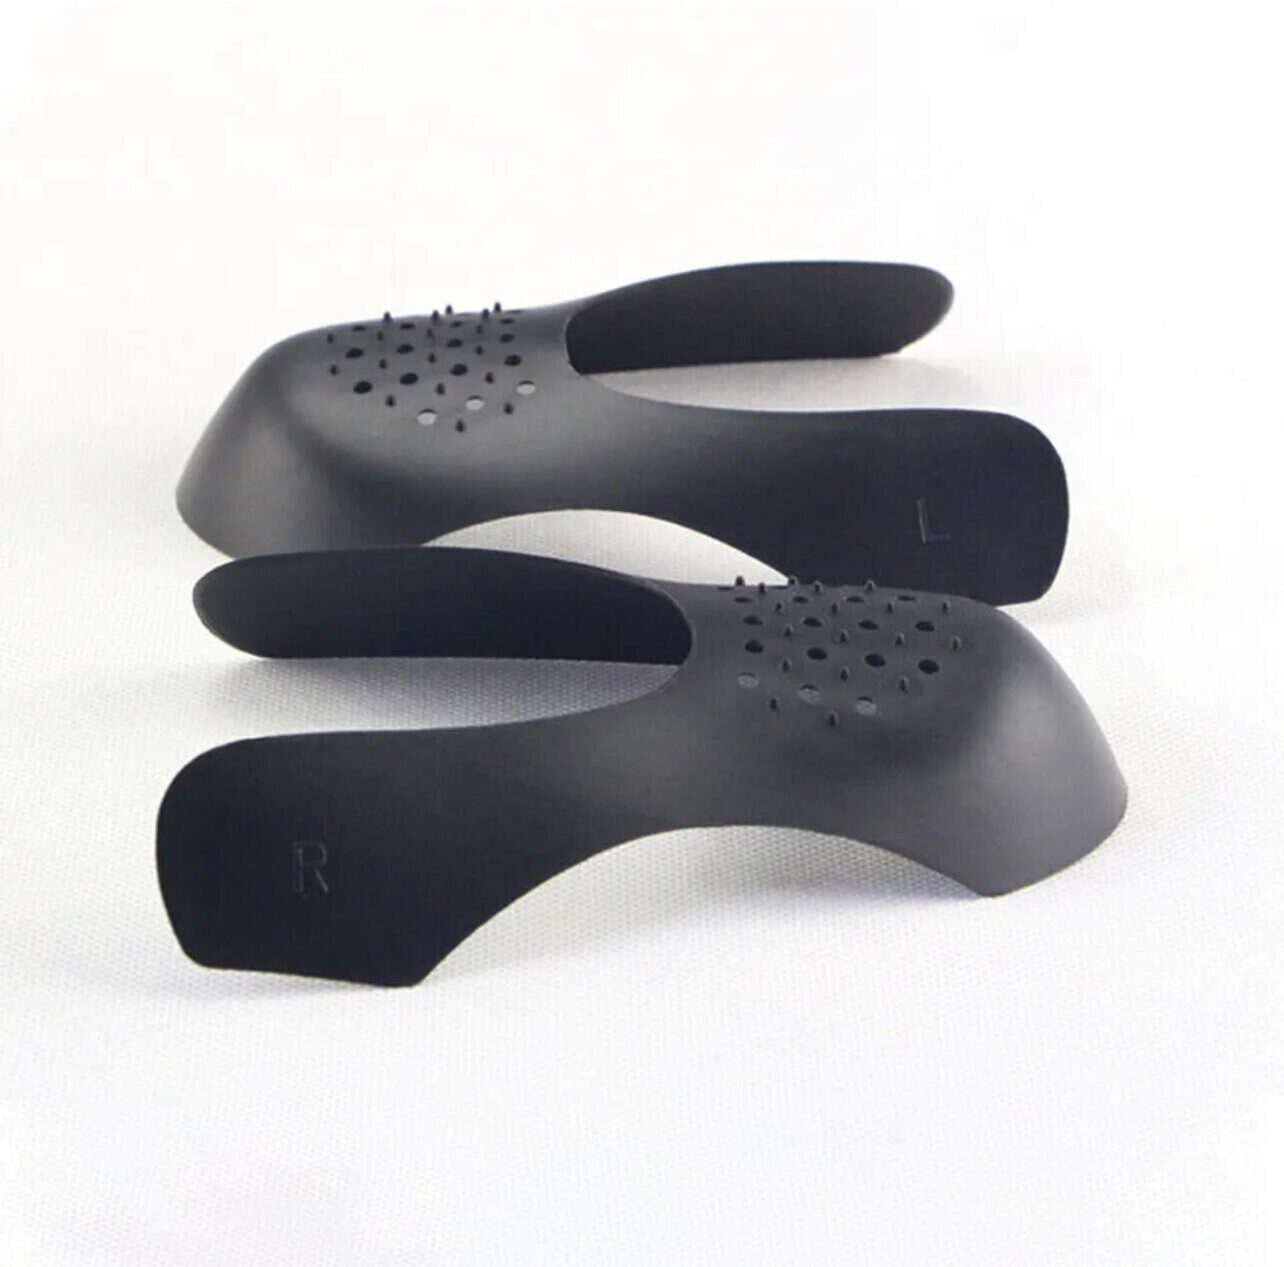 1 Pair Black & White Sneaker Crease Protectors for Jordans - Shoe Inserts